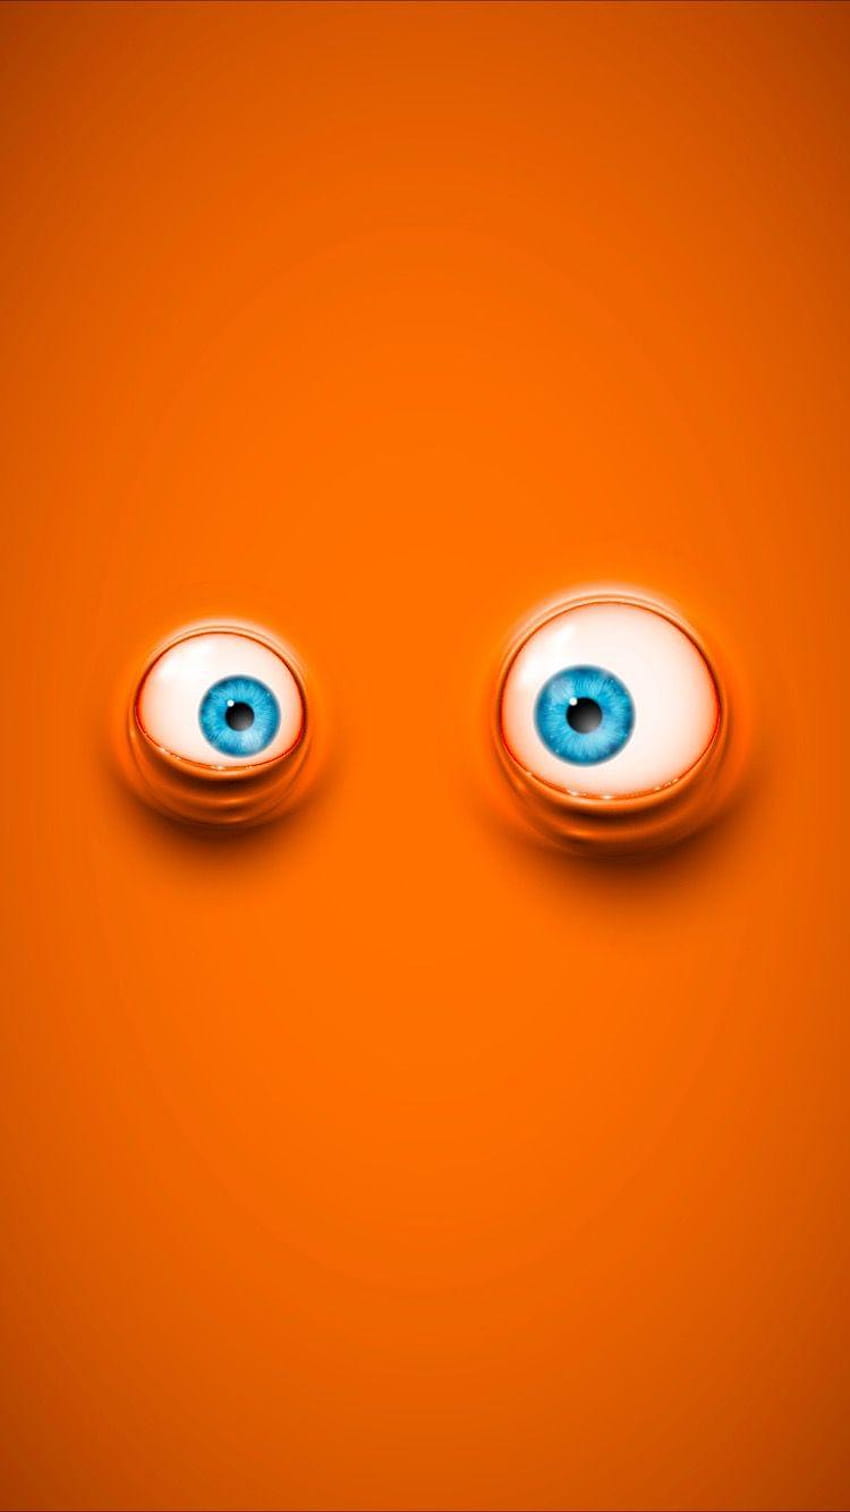 Cool ojos de dibujos animados sobre naranja, para iphone 7 dibujos animados fondo de pantalla del teléfono